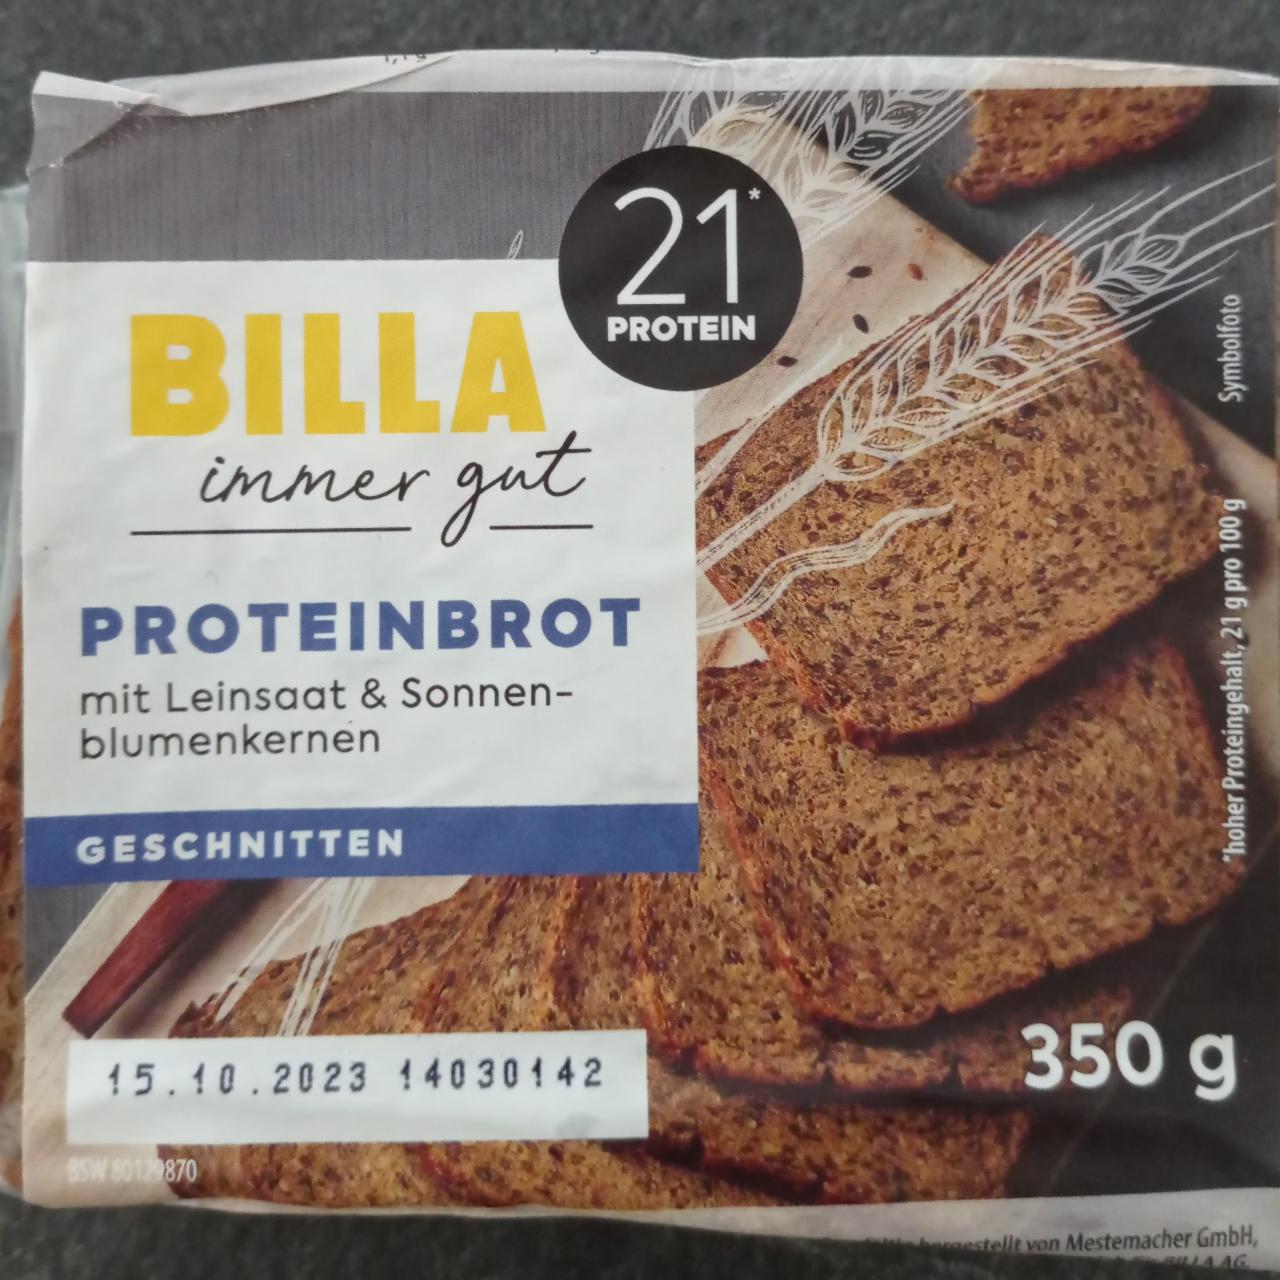 Фото - Хлеб протеиновый Proteinbrot Billa